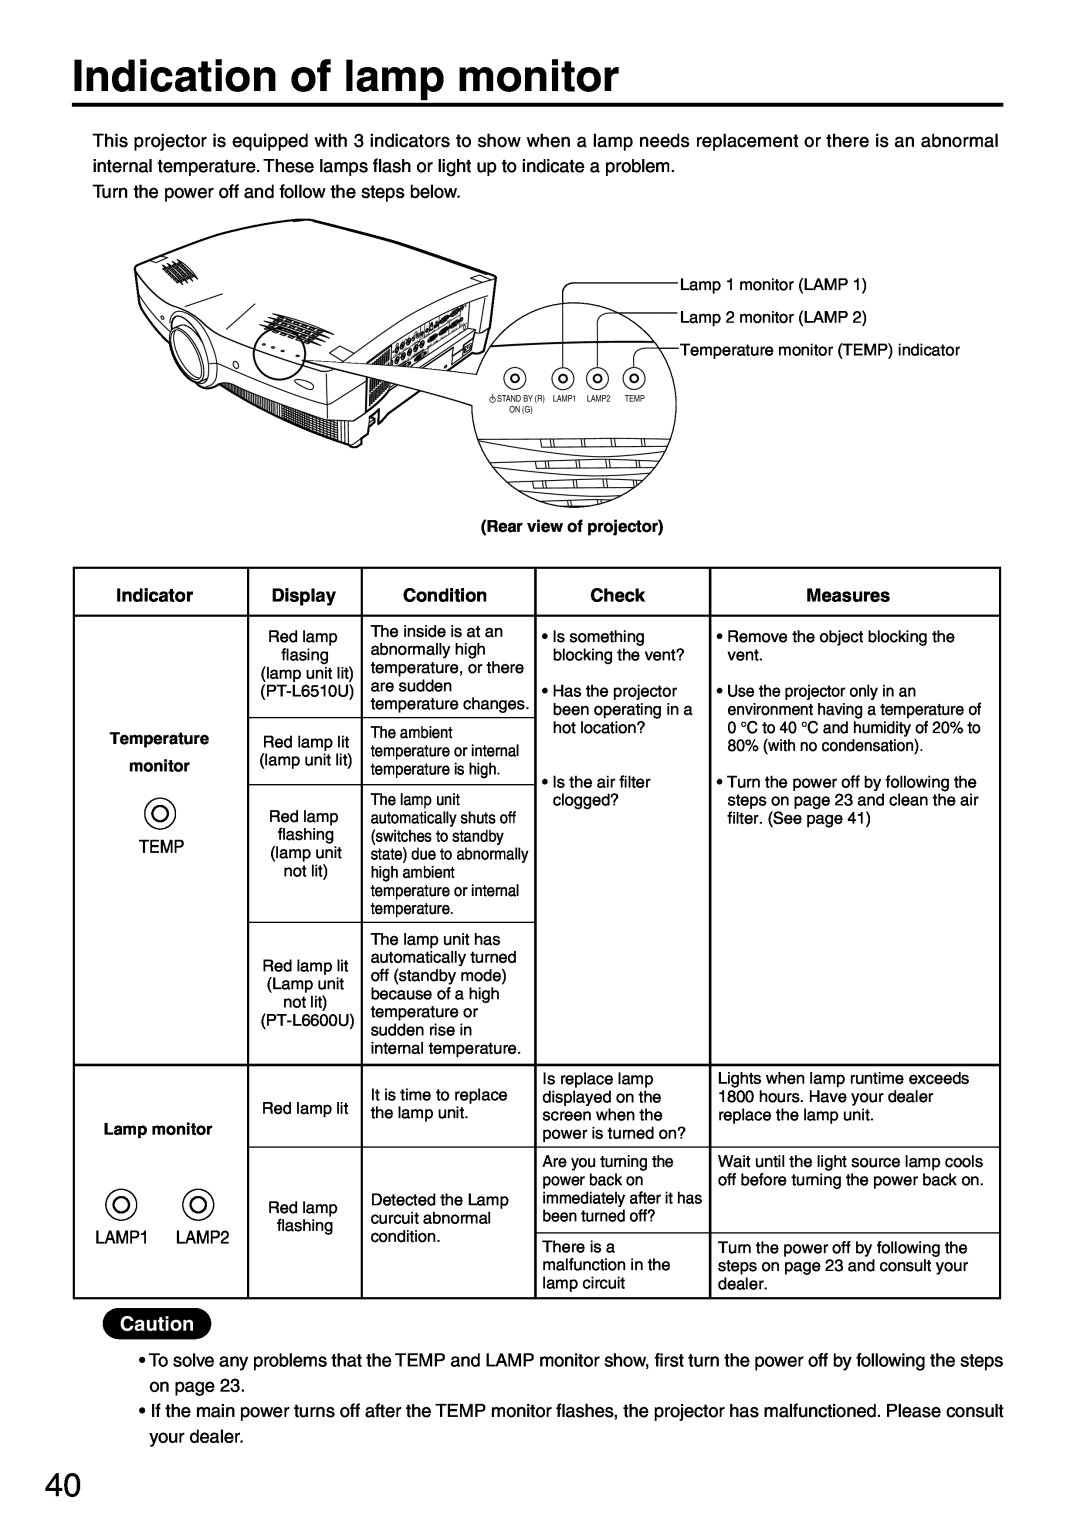 Panasonic PT-L6510U manual Indication of lamp monitor, Indicator, Display, Condition, Check, Measures 